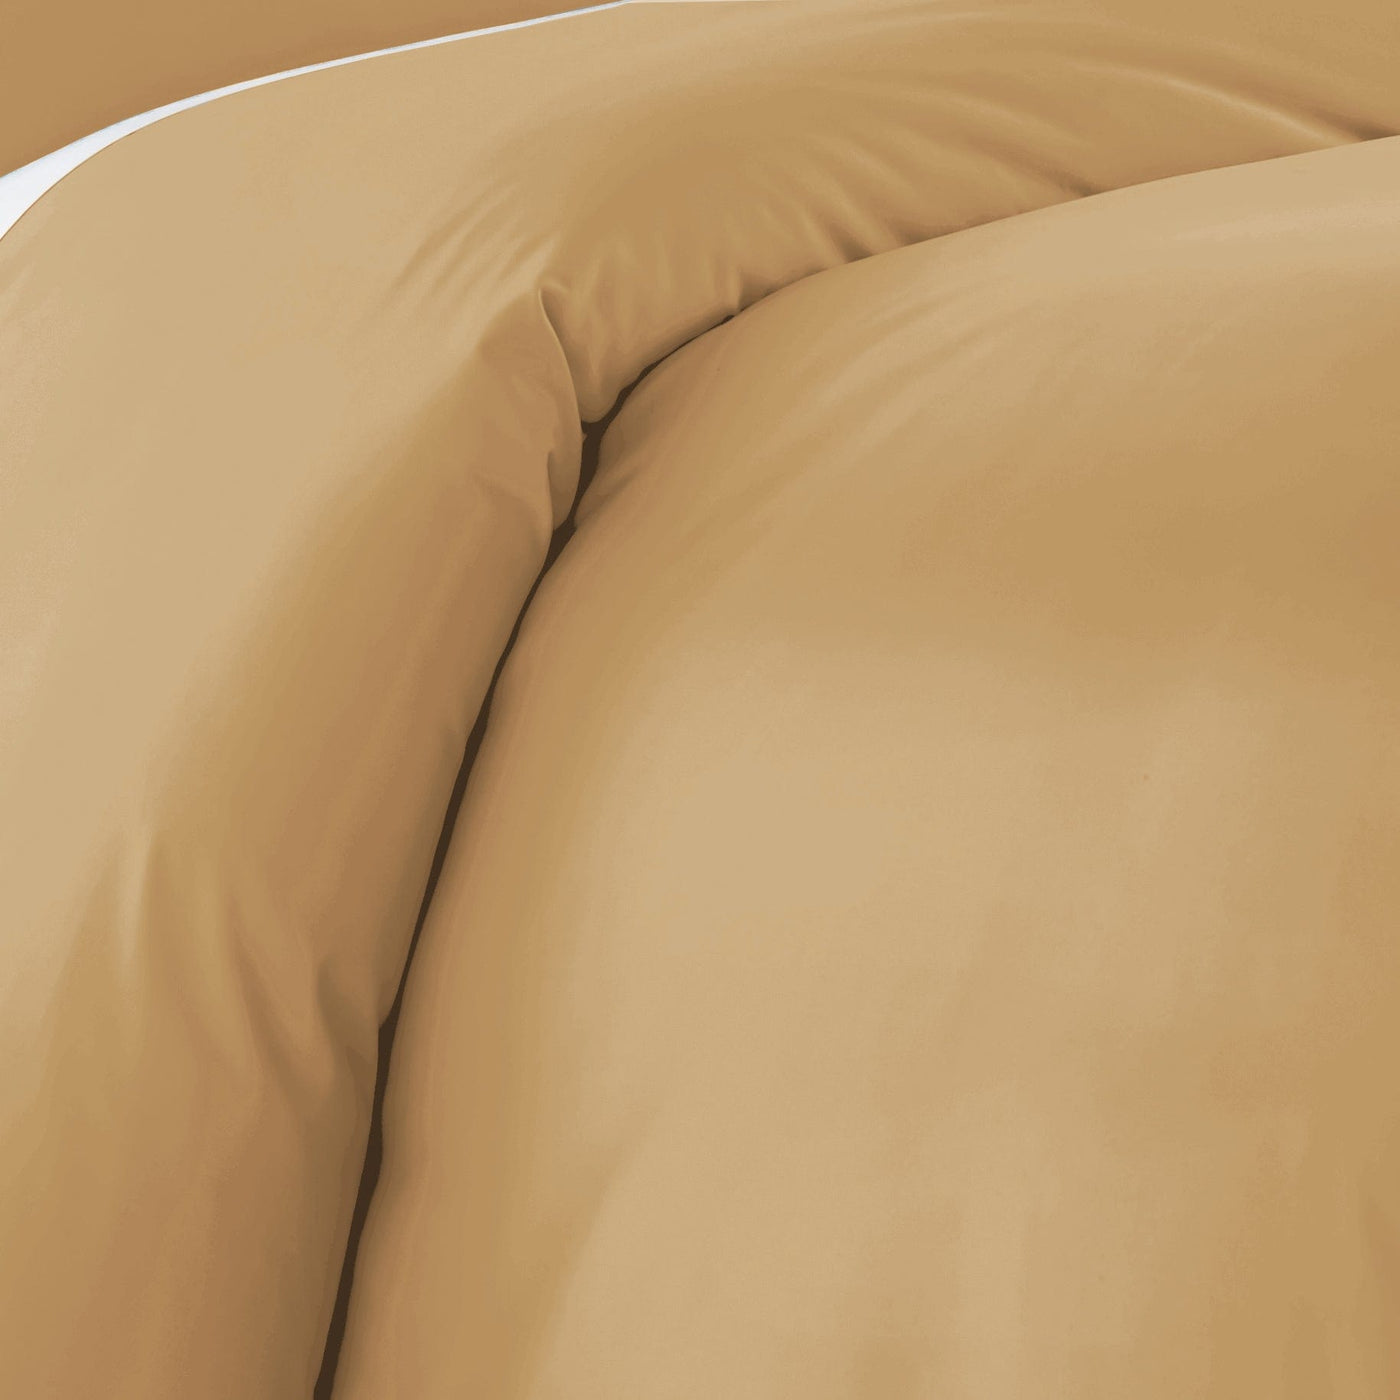 Details of Everyday Essentials Duvet Cover Set in Warm Sand#color_warm-sand